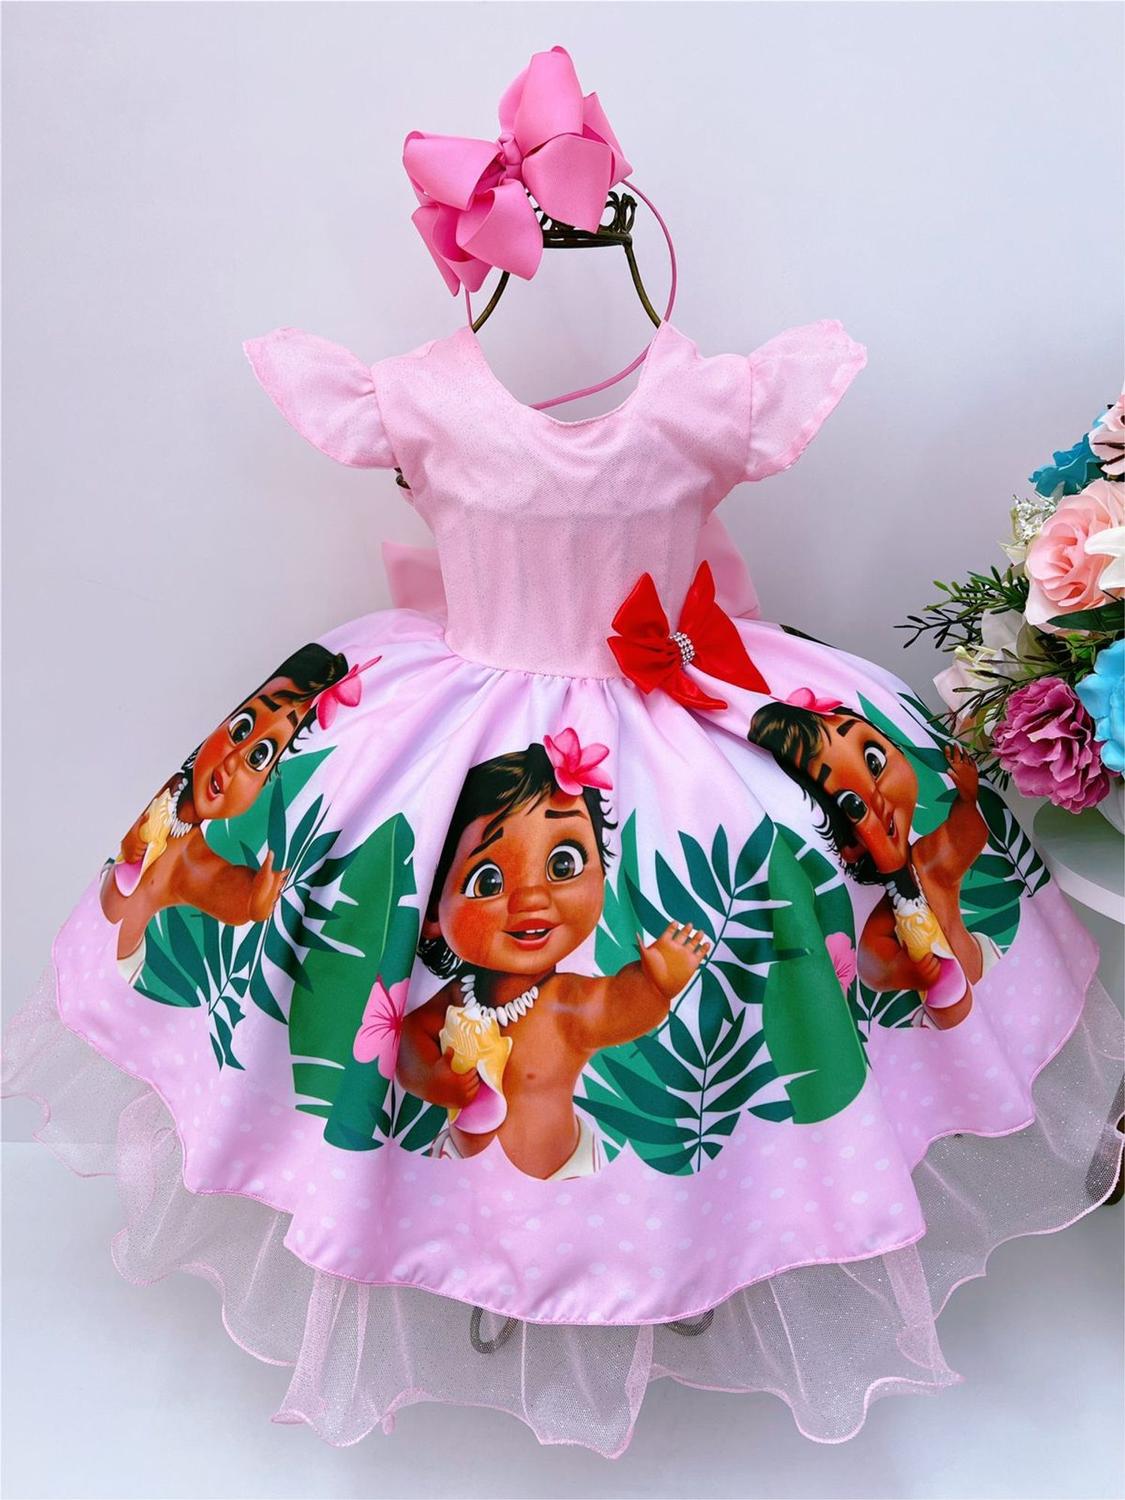 Vestido Moana baby na cor Rosa Tamanho 1ano - Krica - Vestido para Bebês Magazine Luiza